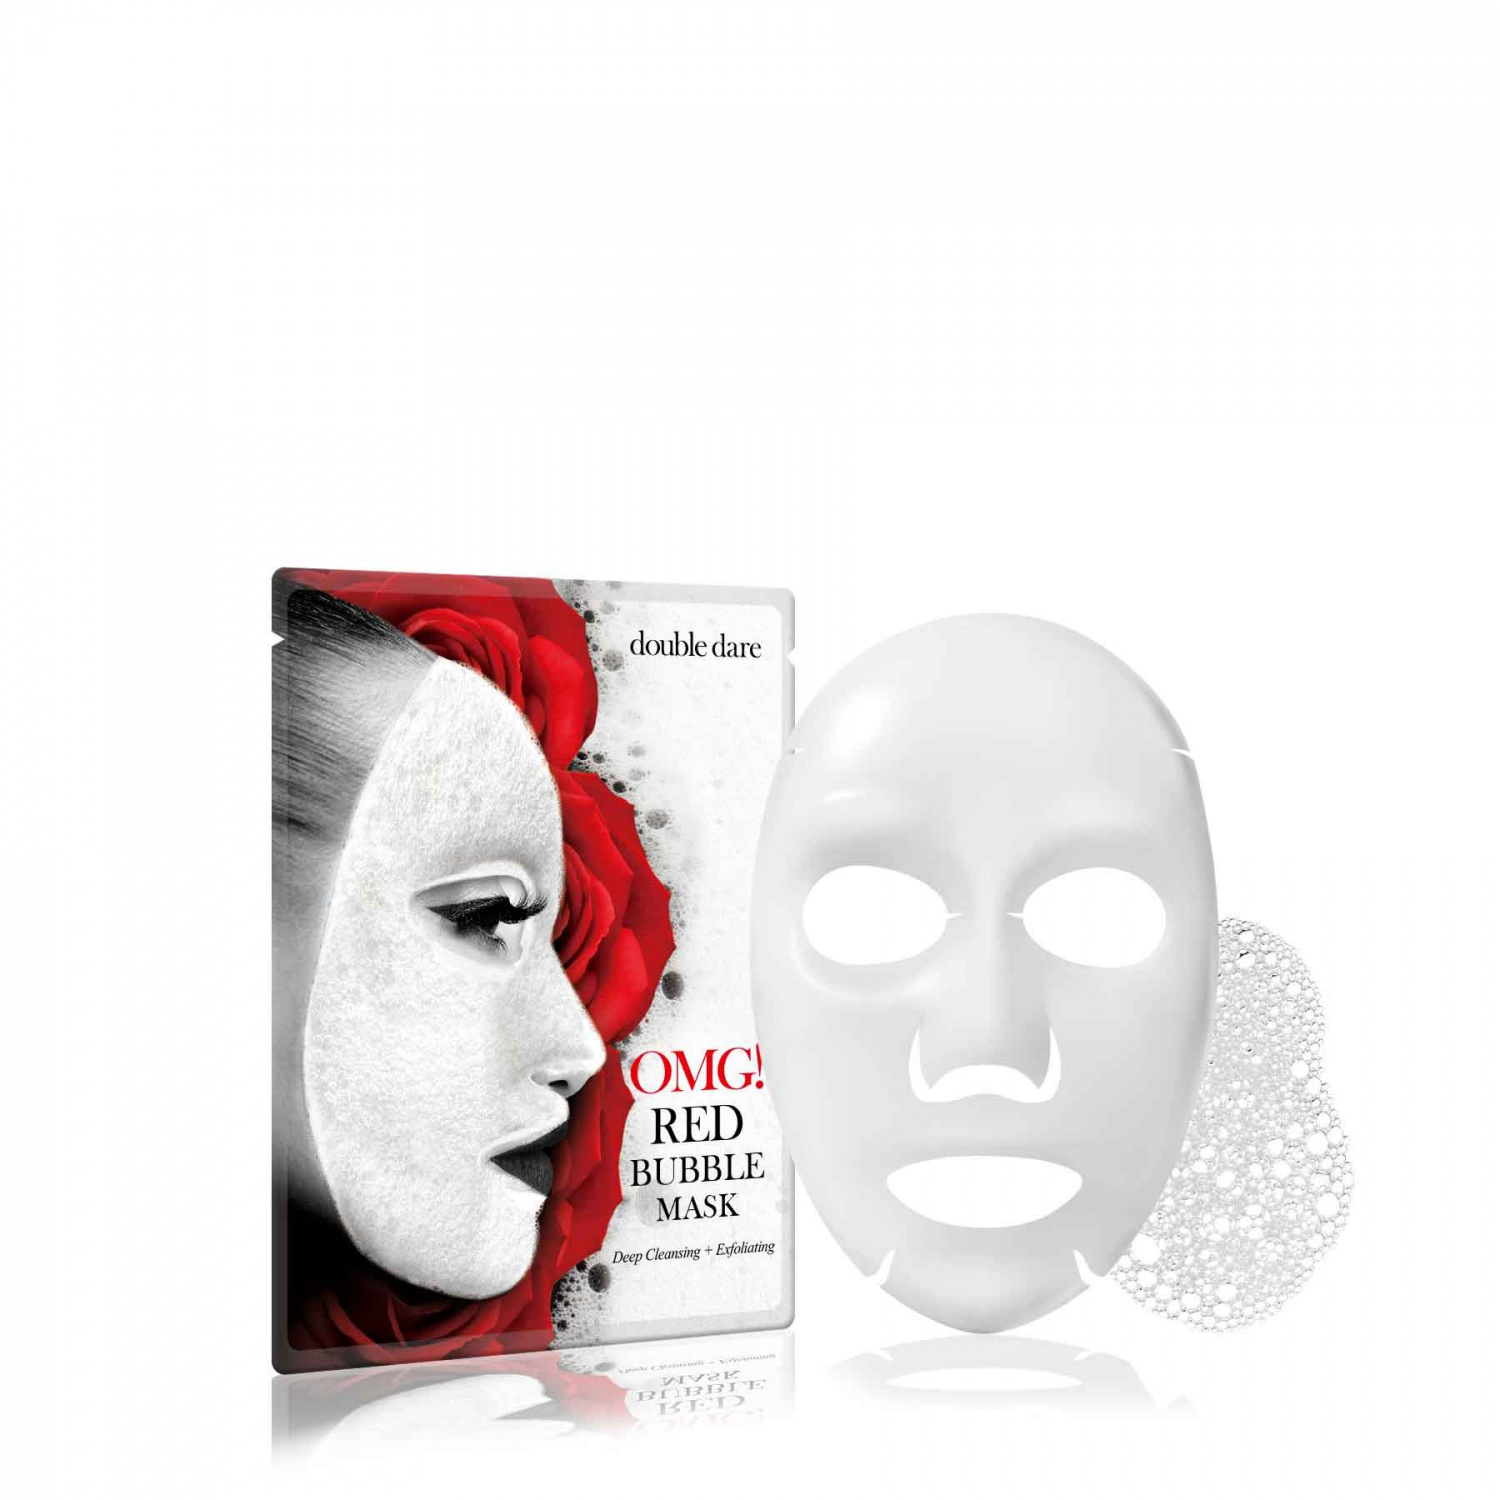 Double Dare OMG! Double Dare OMG! Red Bubble Mask - интернет-магазин профессиональной косметики Spadream, изображение 29898